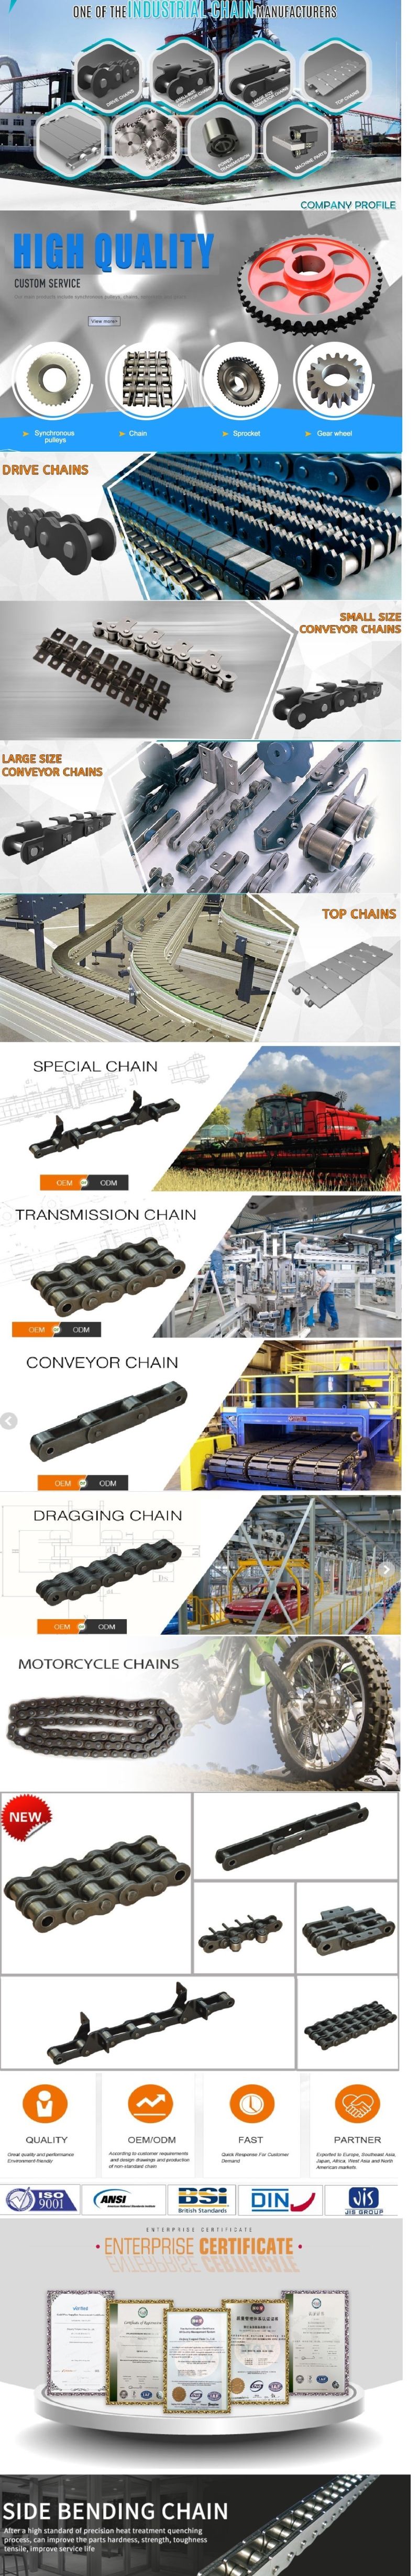 European Standard B Series Sharp Top Chain 06b 08b 10b 12b 16b Sharp Top Conveyor Chain Heavy Duty Decorative Chain for Wood Industry